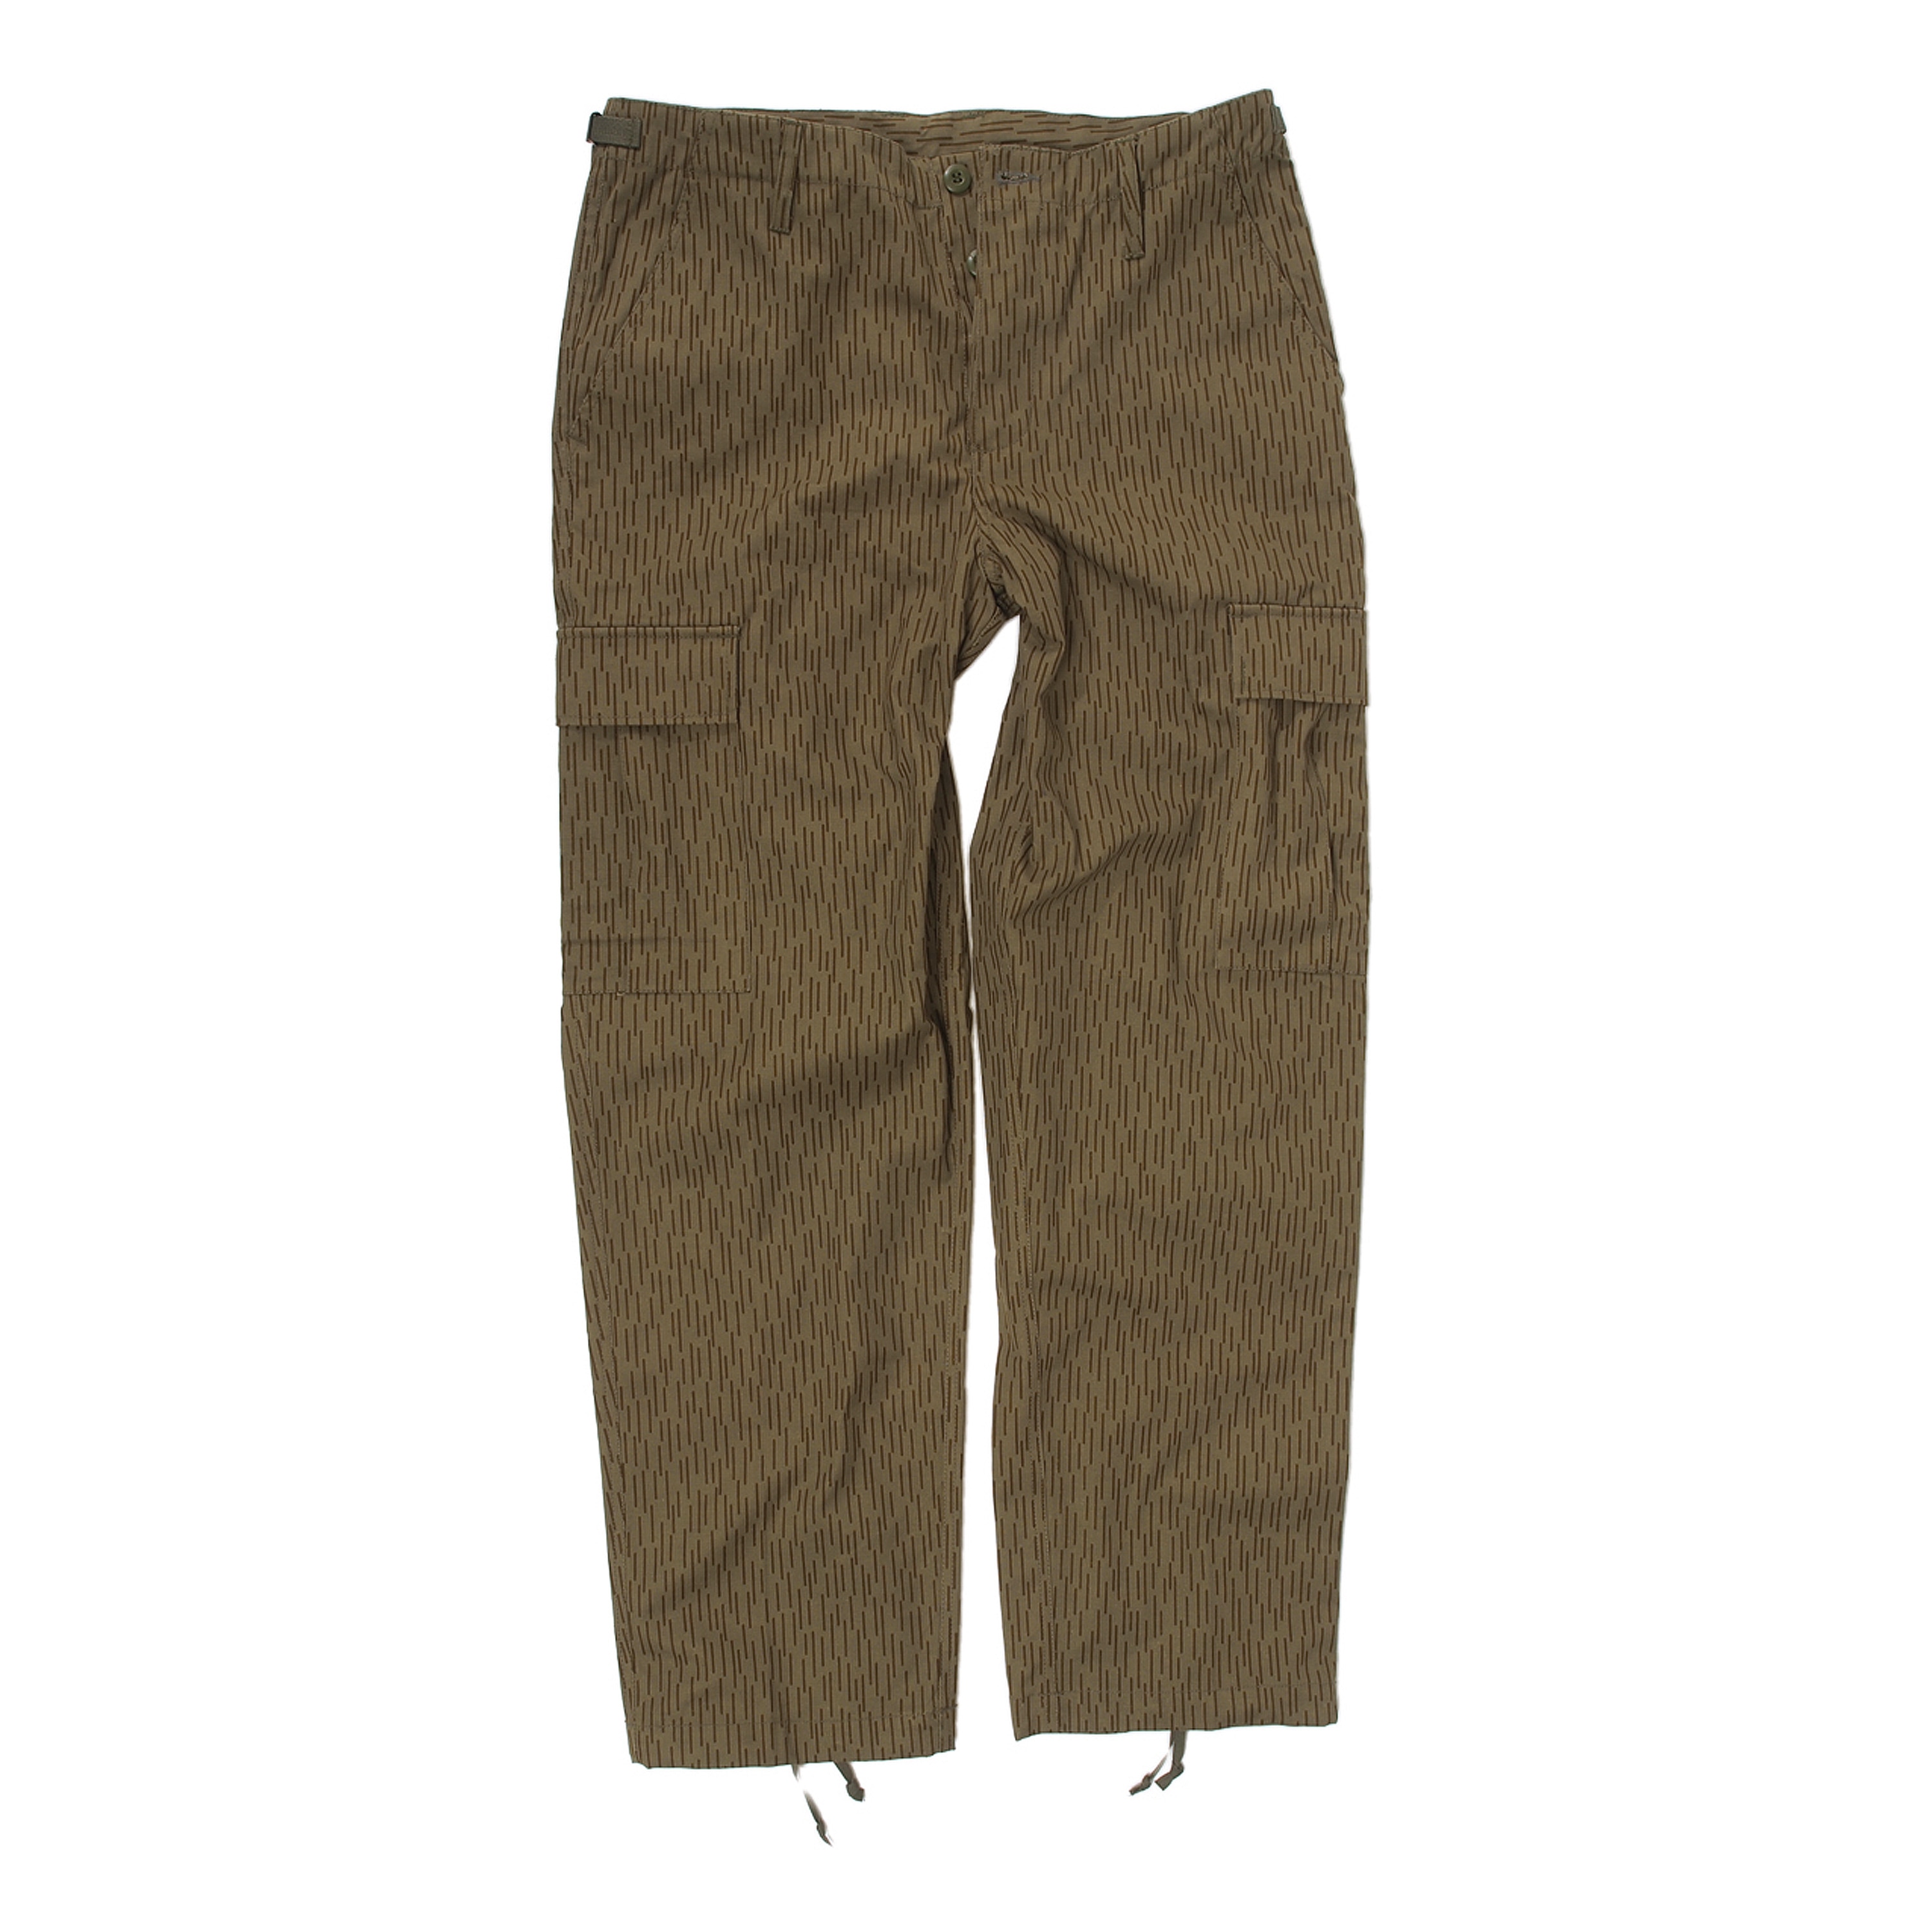 Pantalon Hiver de Camouflage NVA avec Bavette